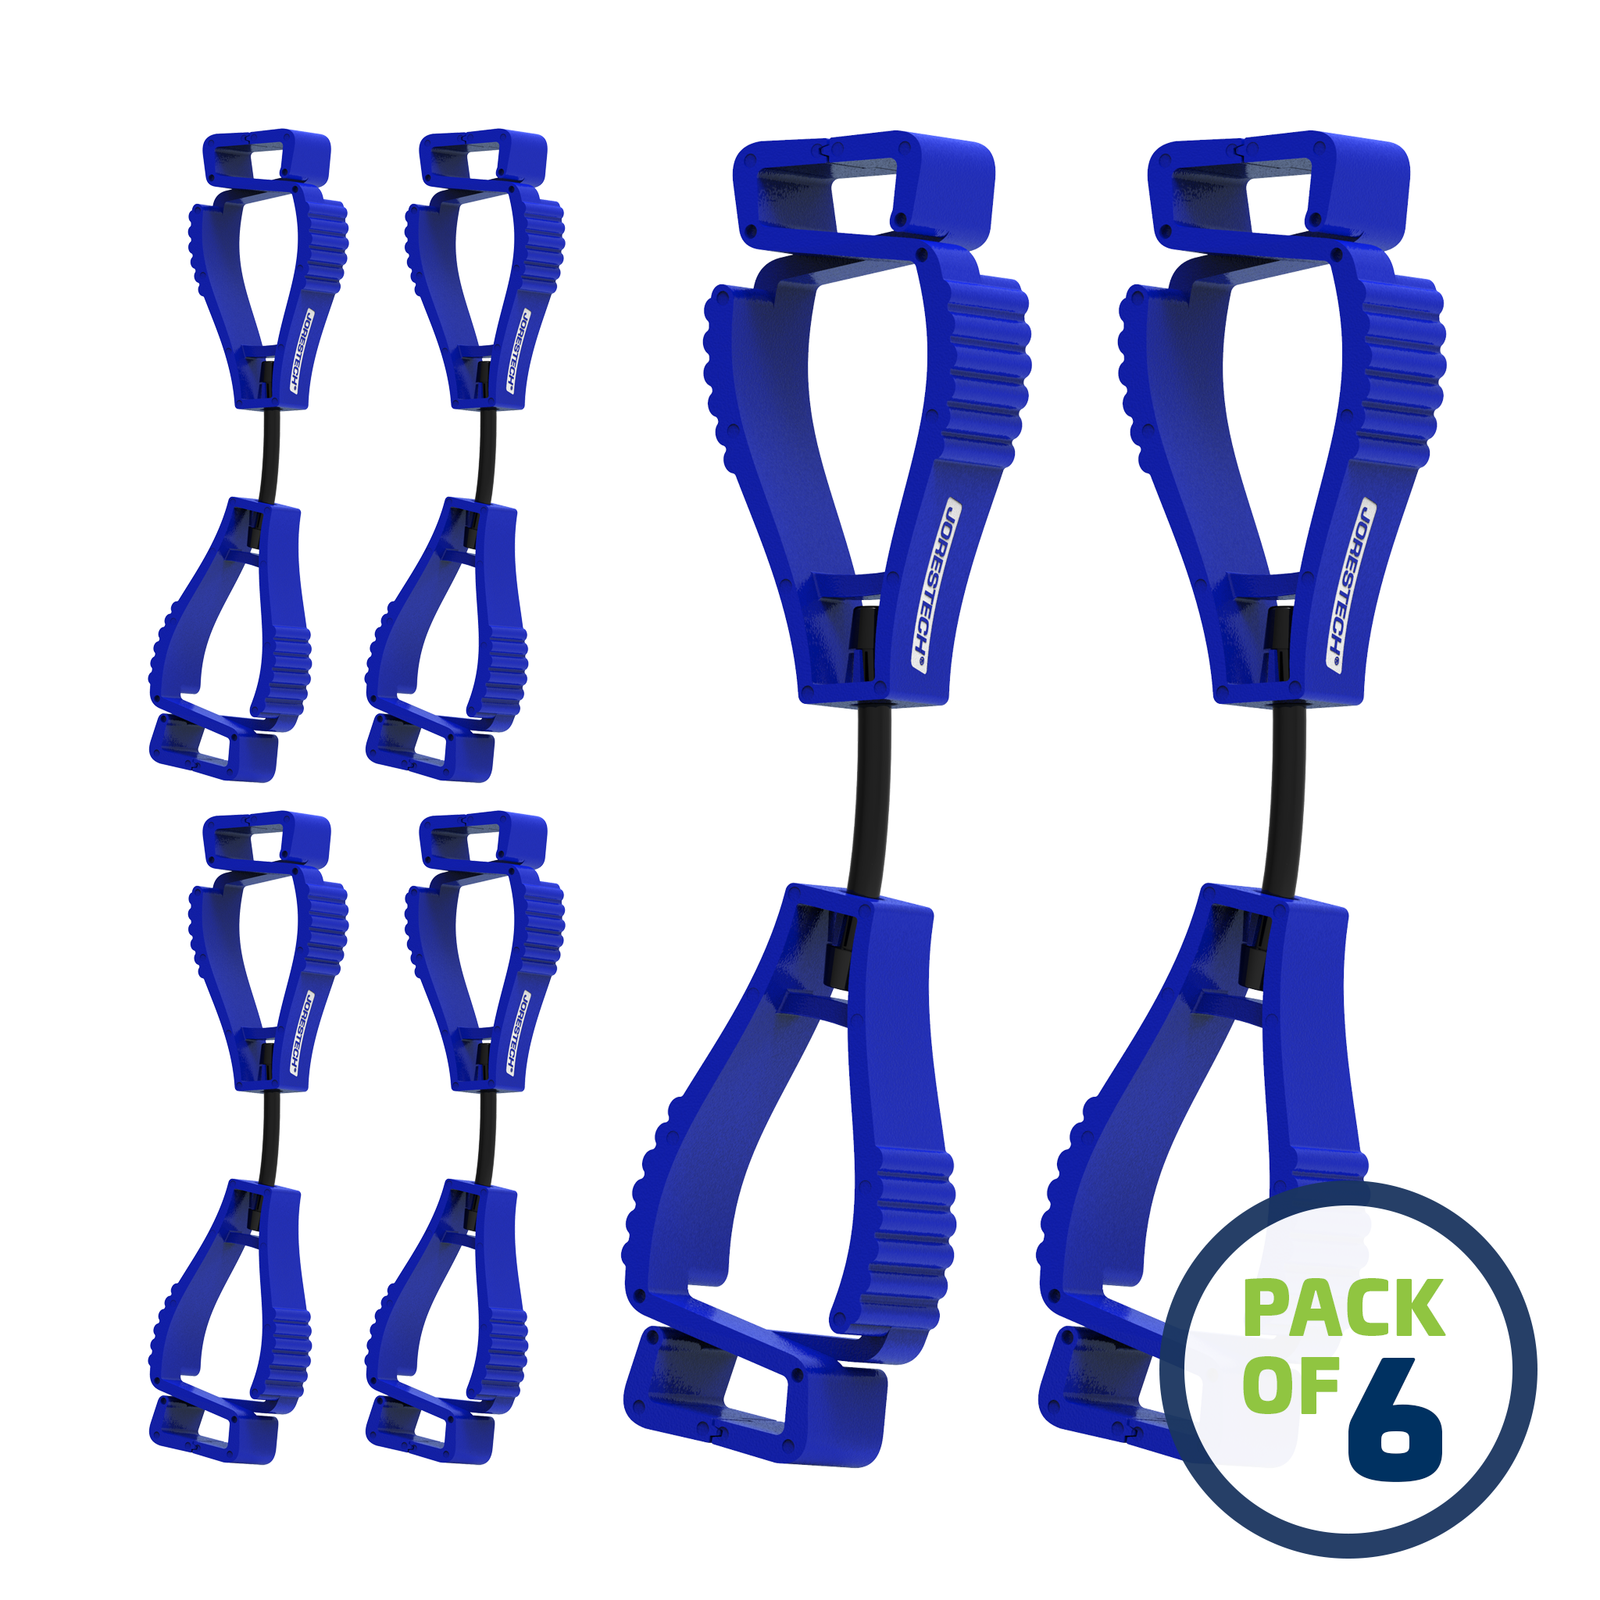 Pack of 6 Blue JORESTECH glove clip safety holders